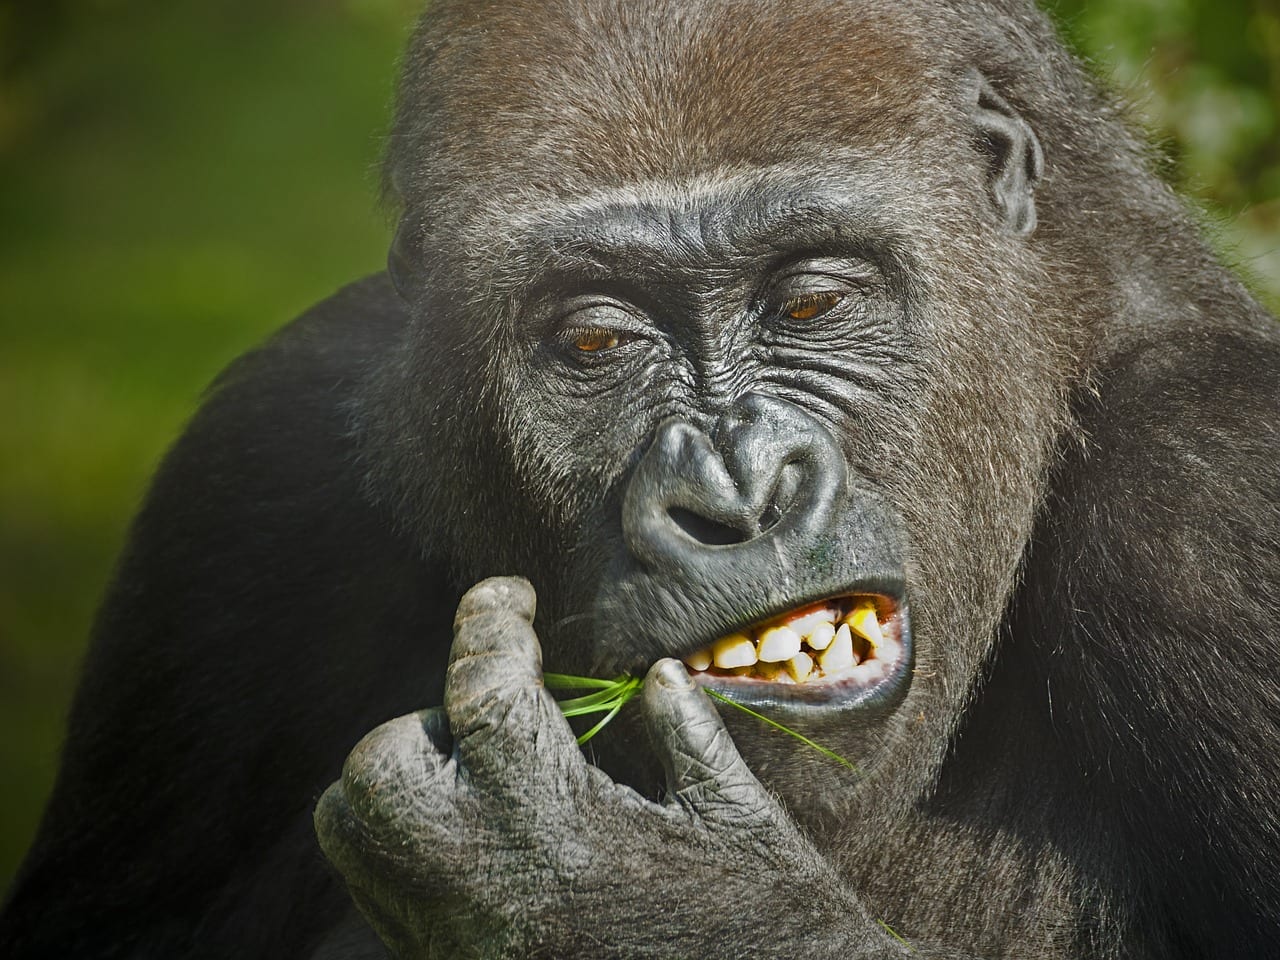 https://pixabay.com/en/gorilla-monkey-animal-zoo-hunger-1114750/